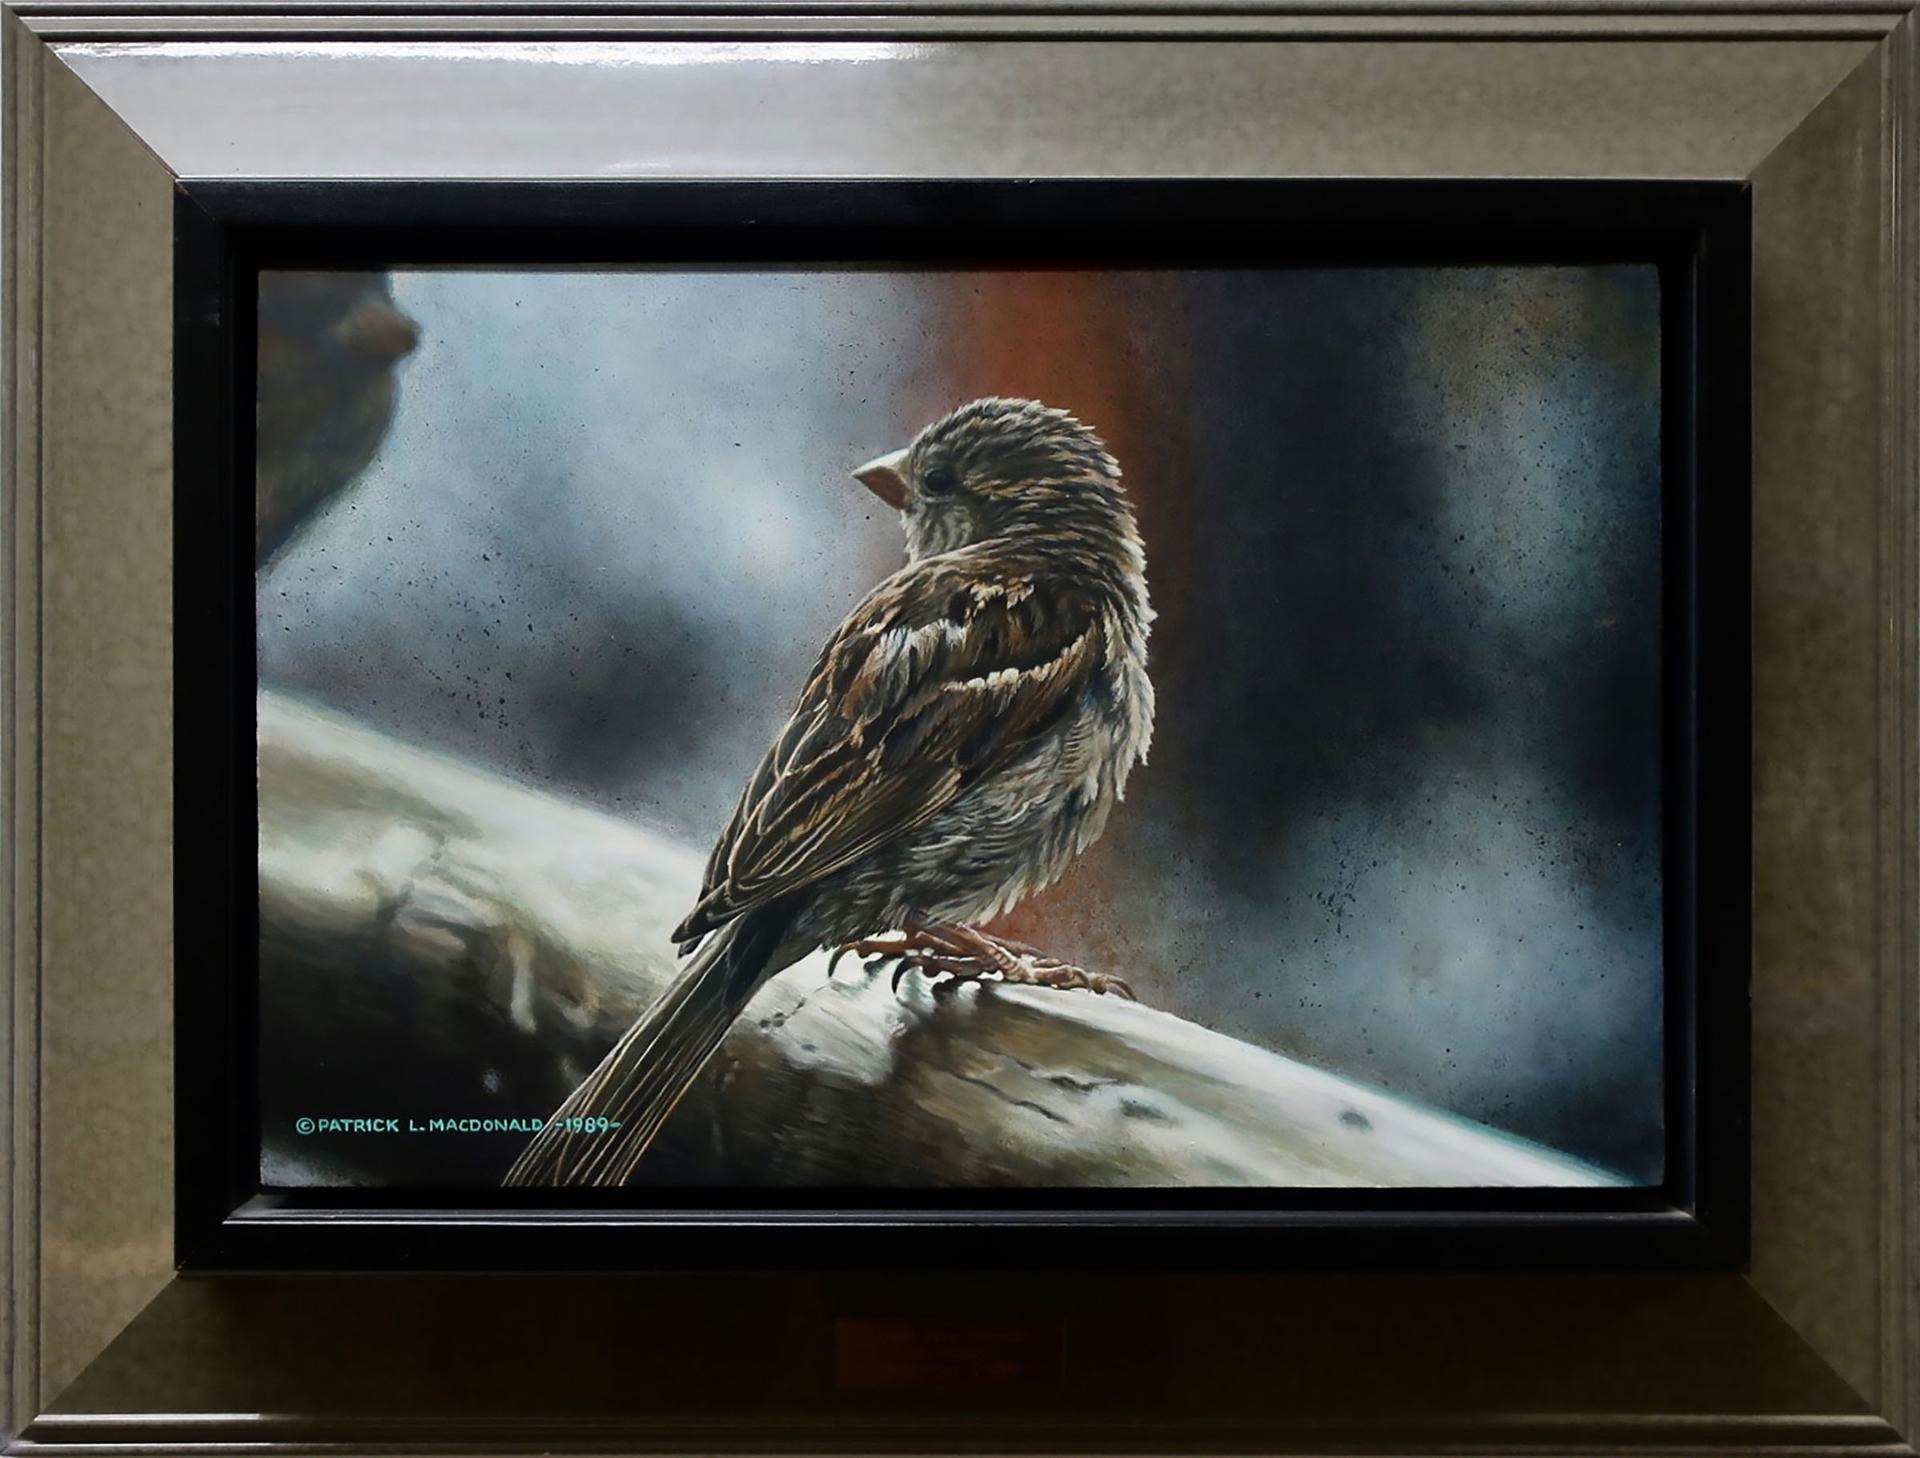 Patrick Lewis MacDonald - Untitled (Sparrow On Alert)